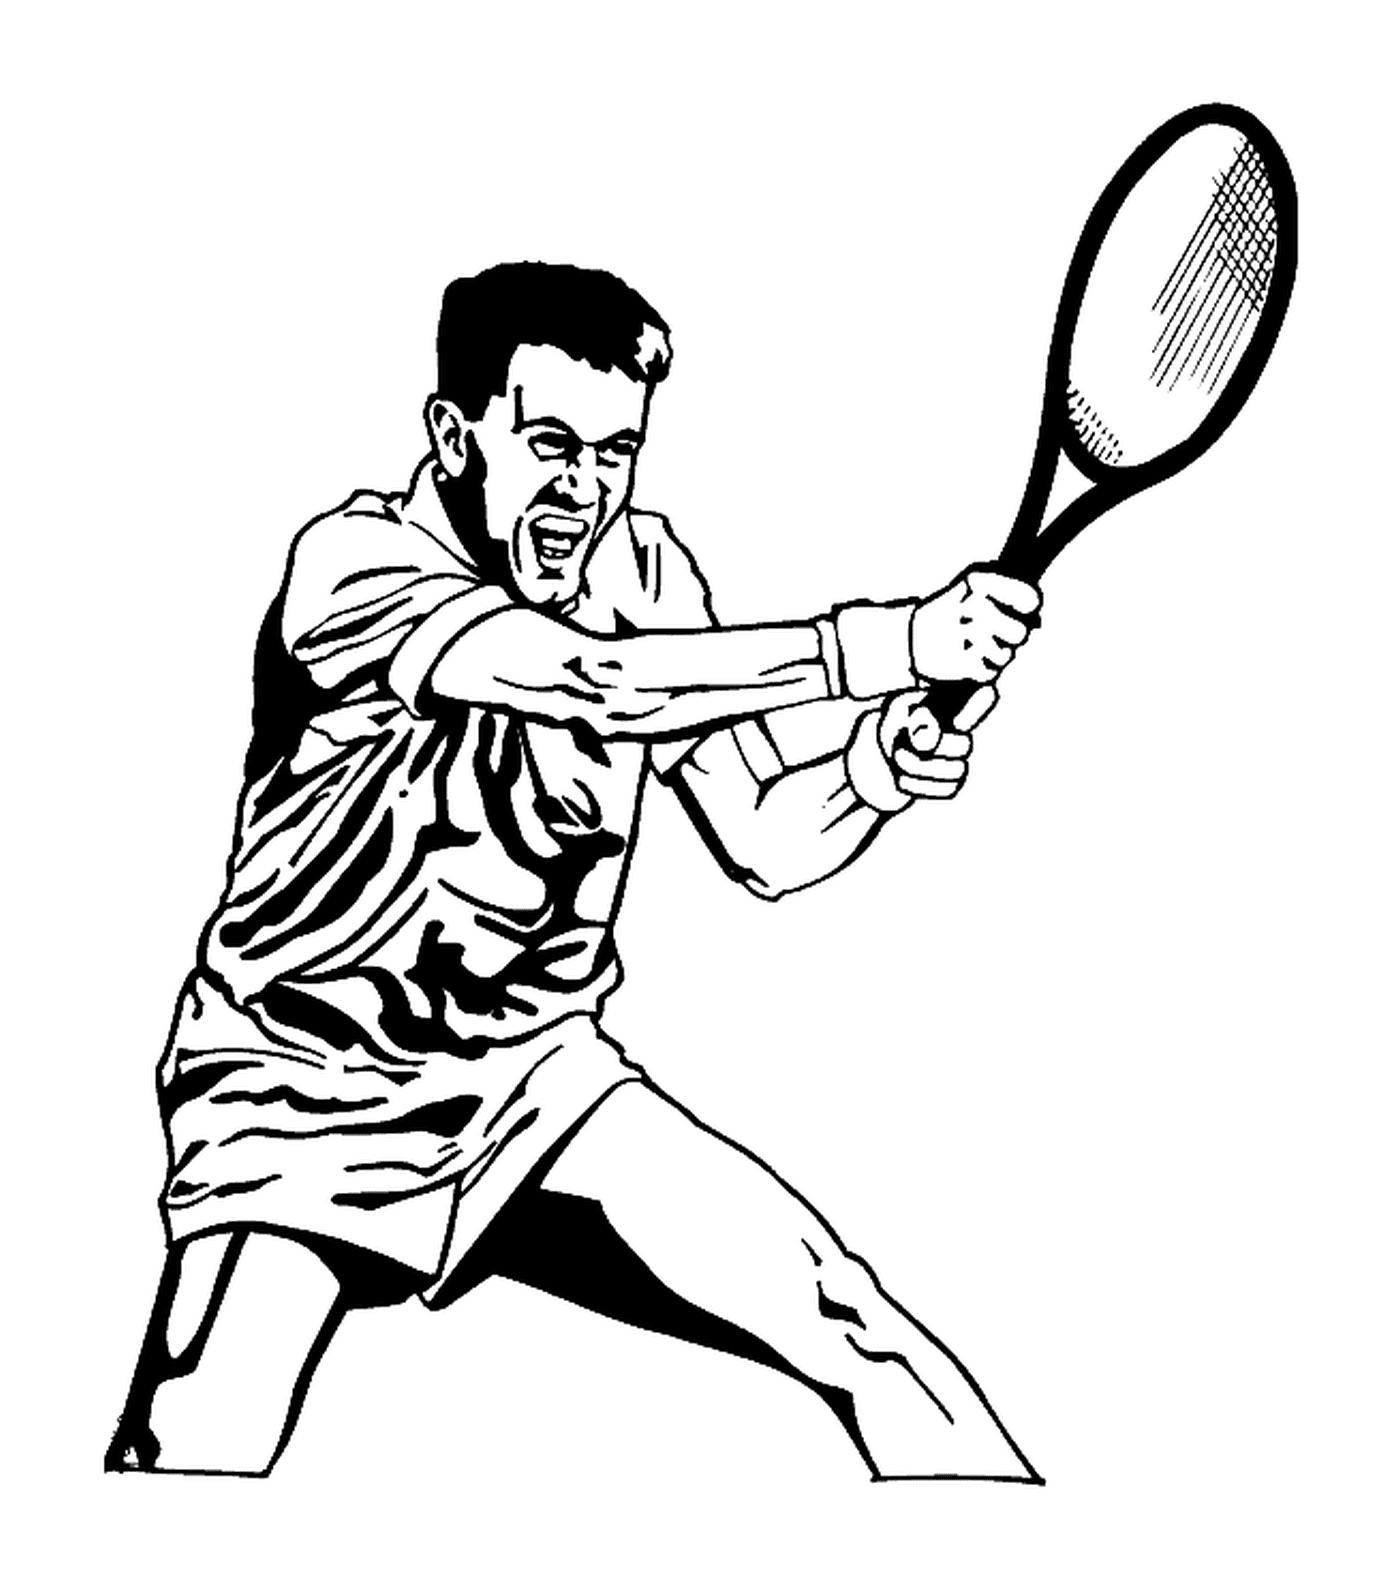  Un tennista in azione 